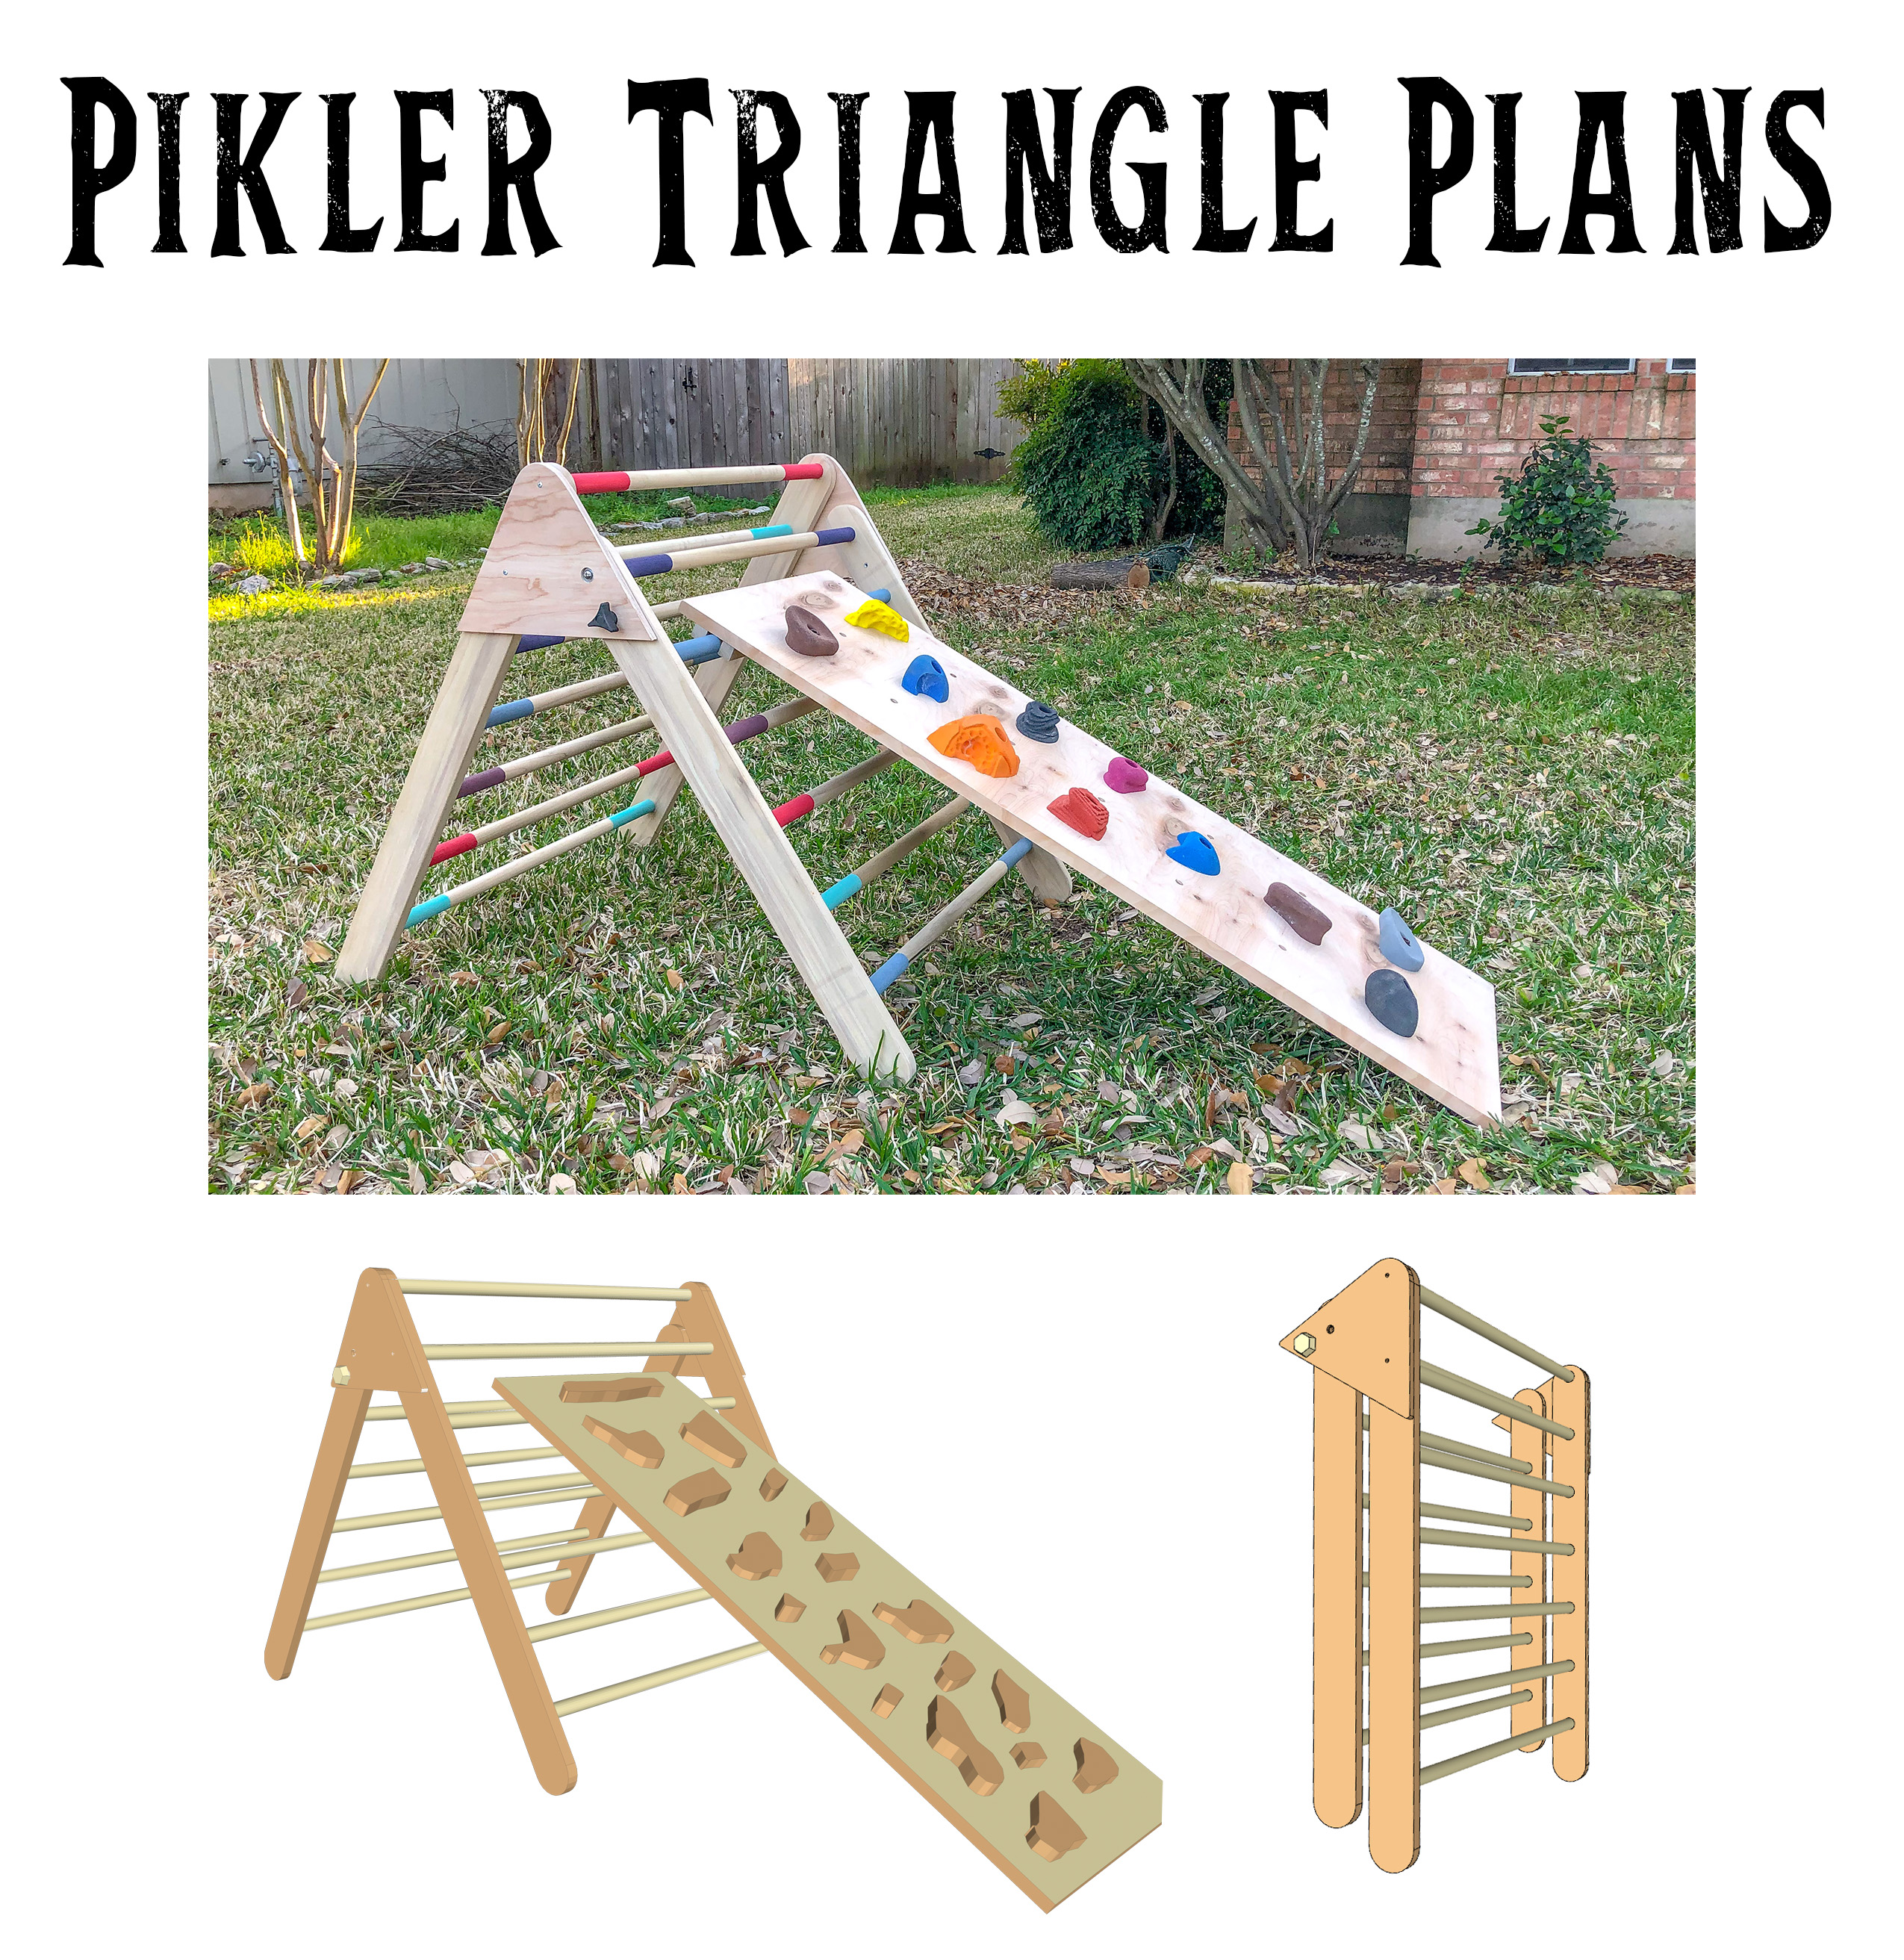 Pikler Triangle Plans